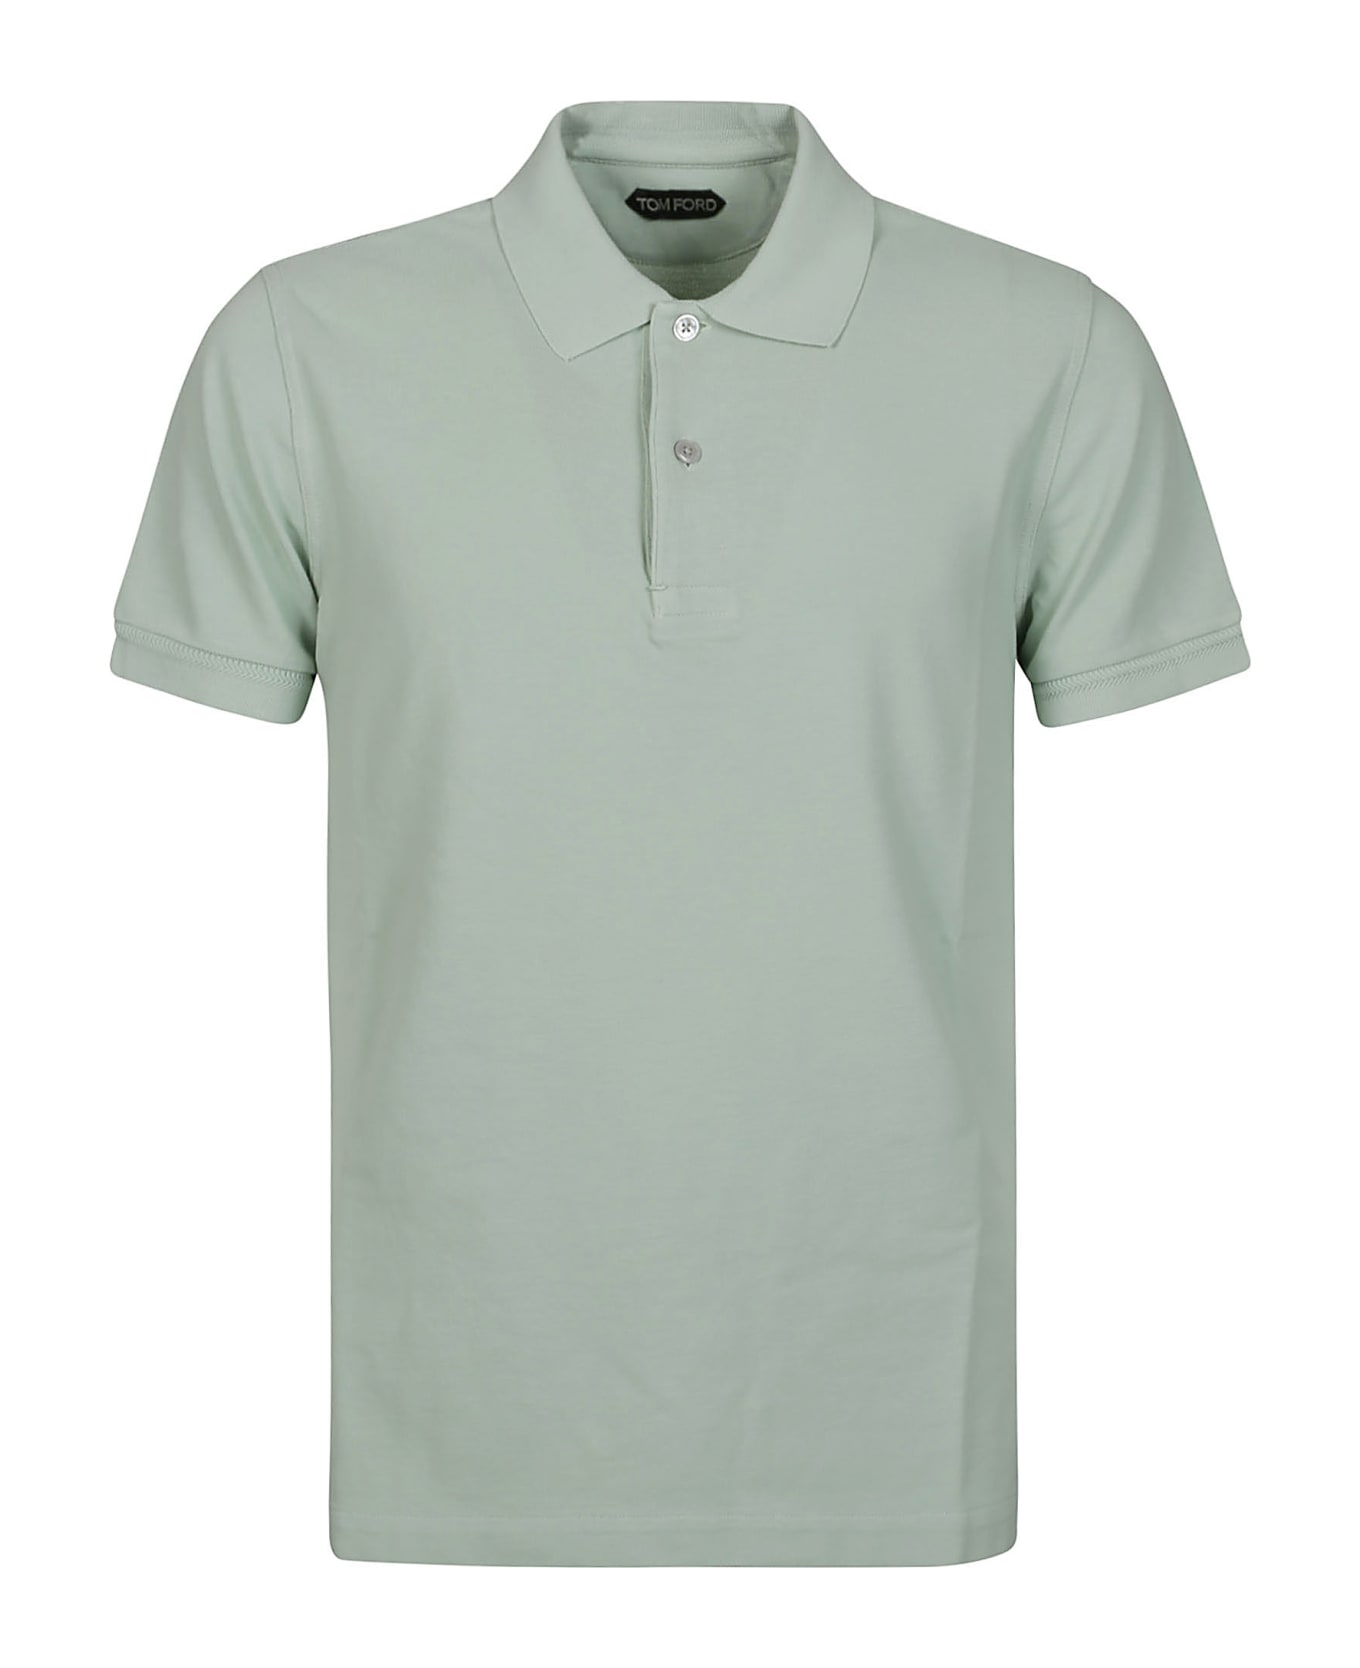 Tom Ford Tennis Piquet Short Sleeve Polo Shirt - Pale Mint ポロシャツ